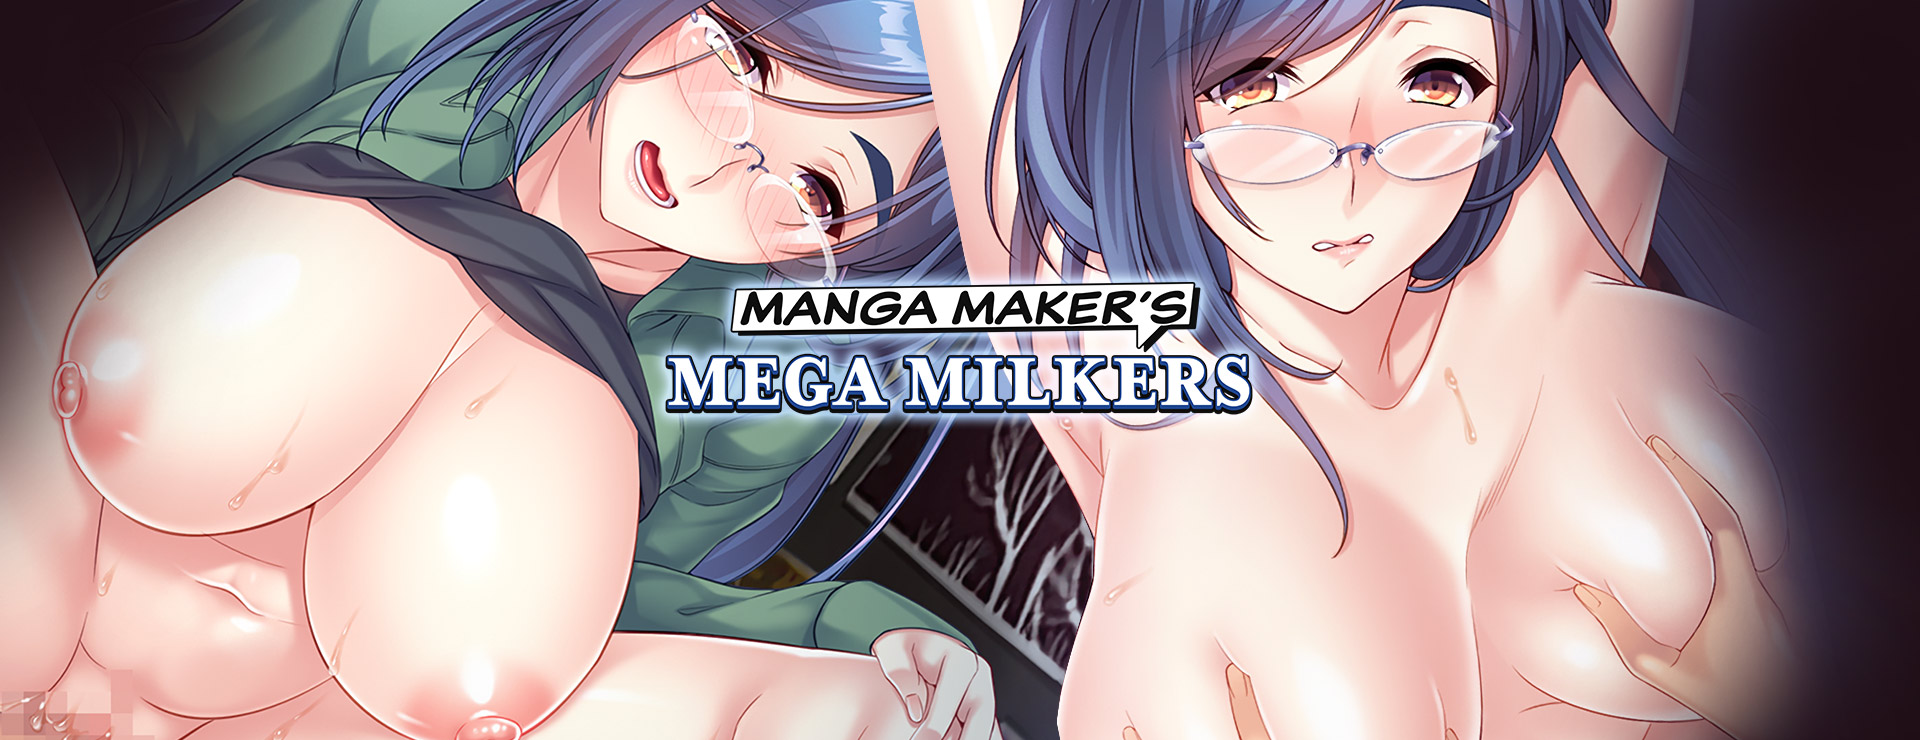 Manga Maker's Mega Milkers - Powieść wizualna Gra